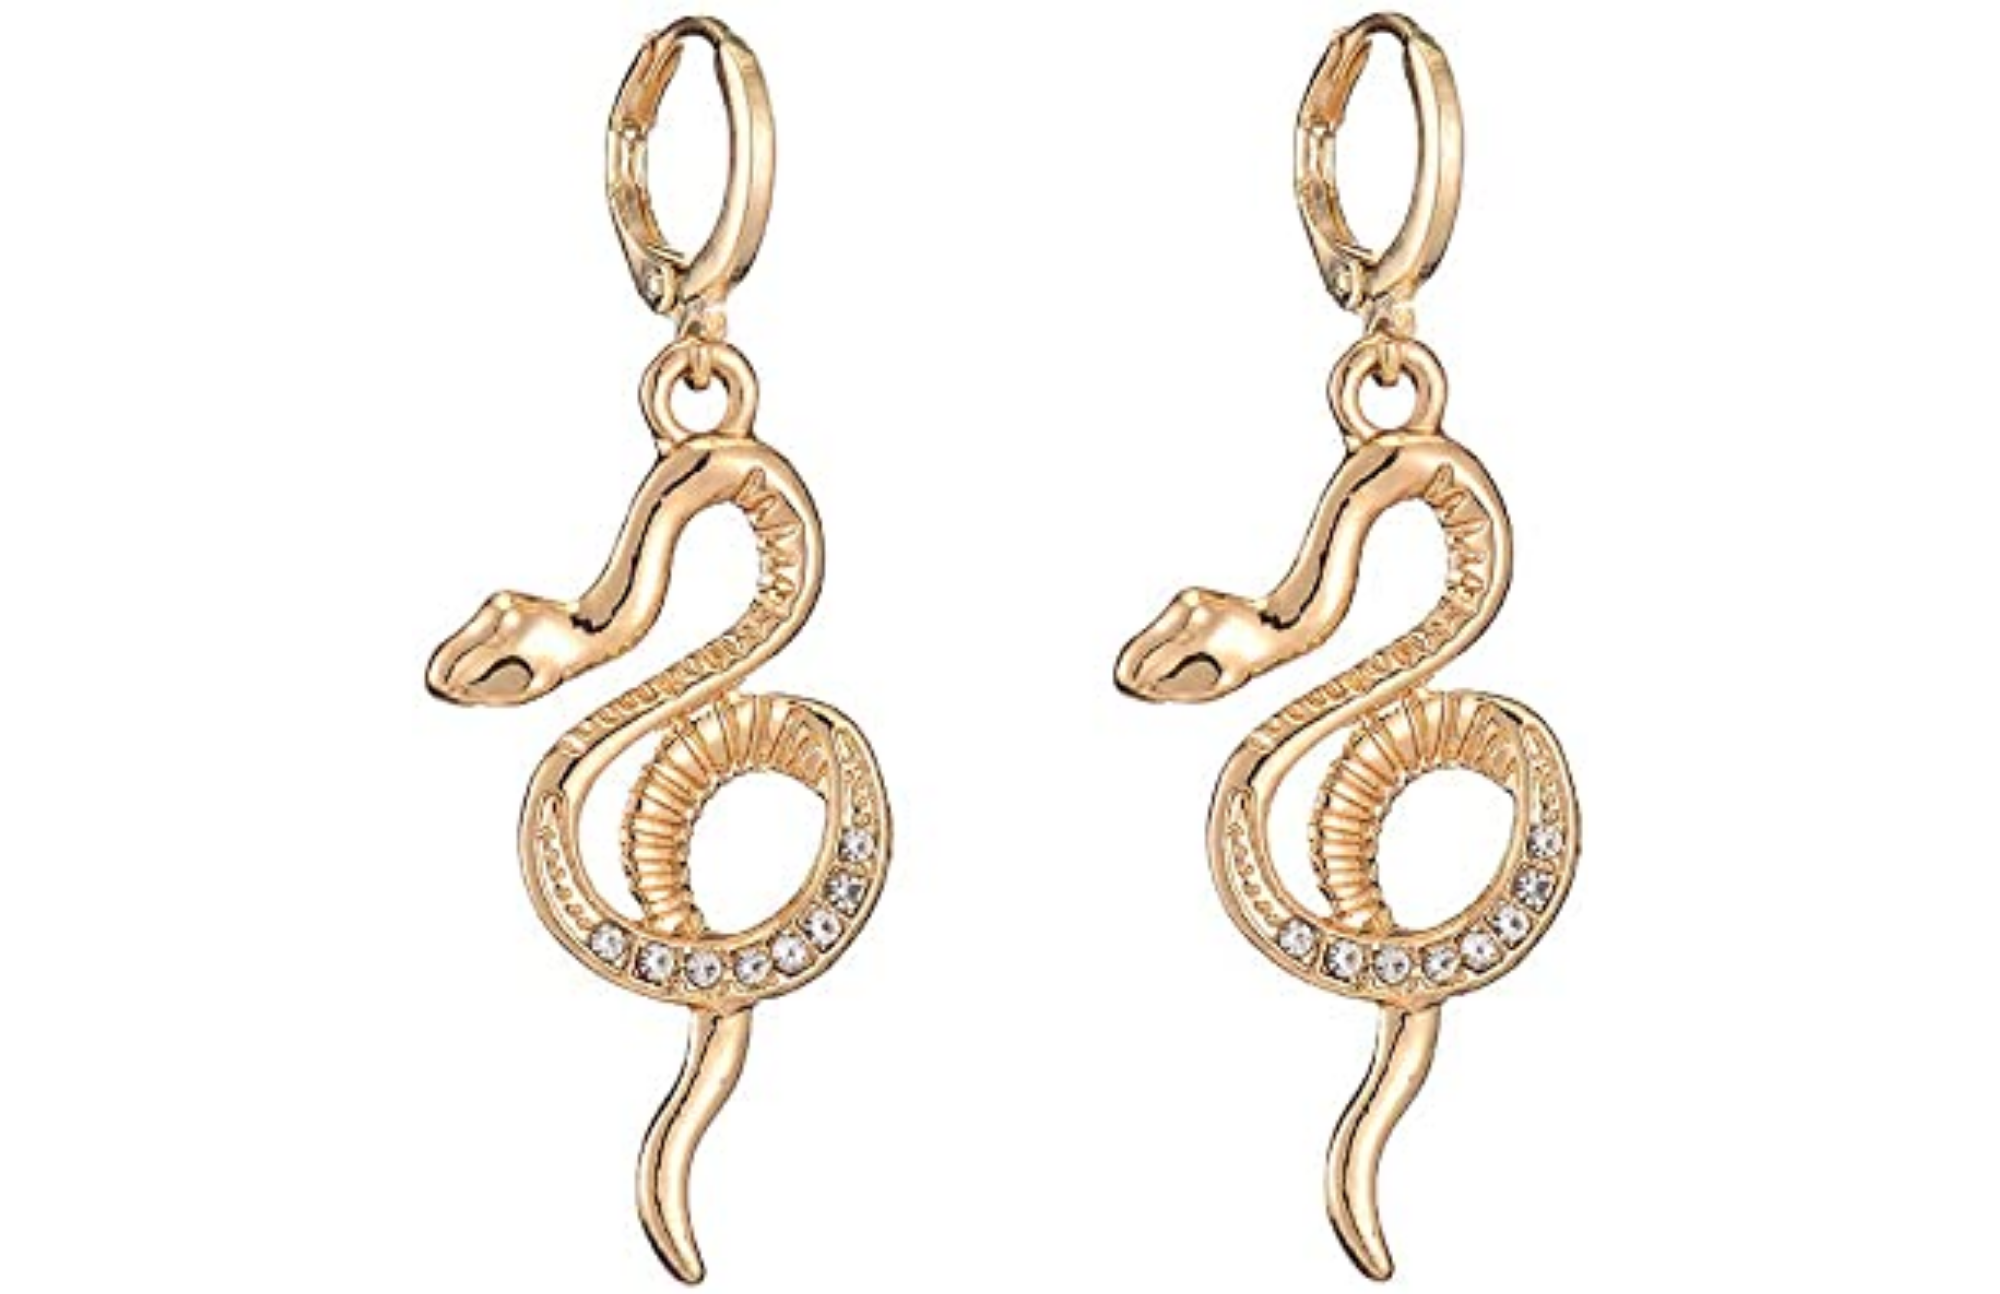 A pair of mevecco gold snake hoop earrings